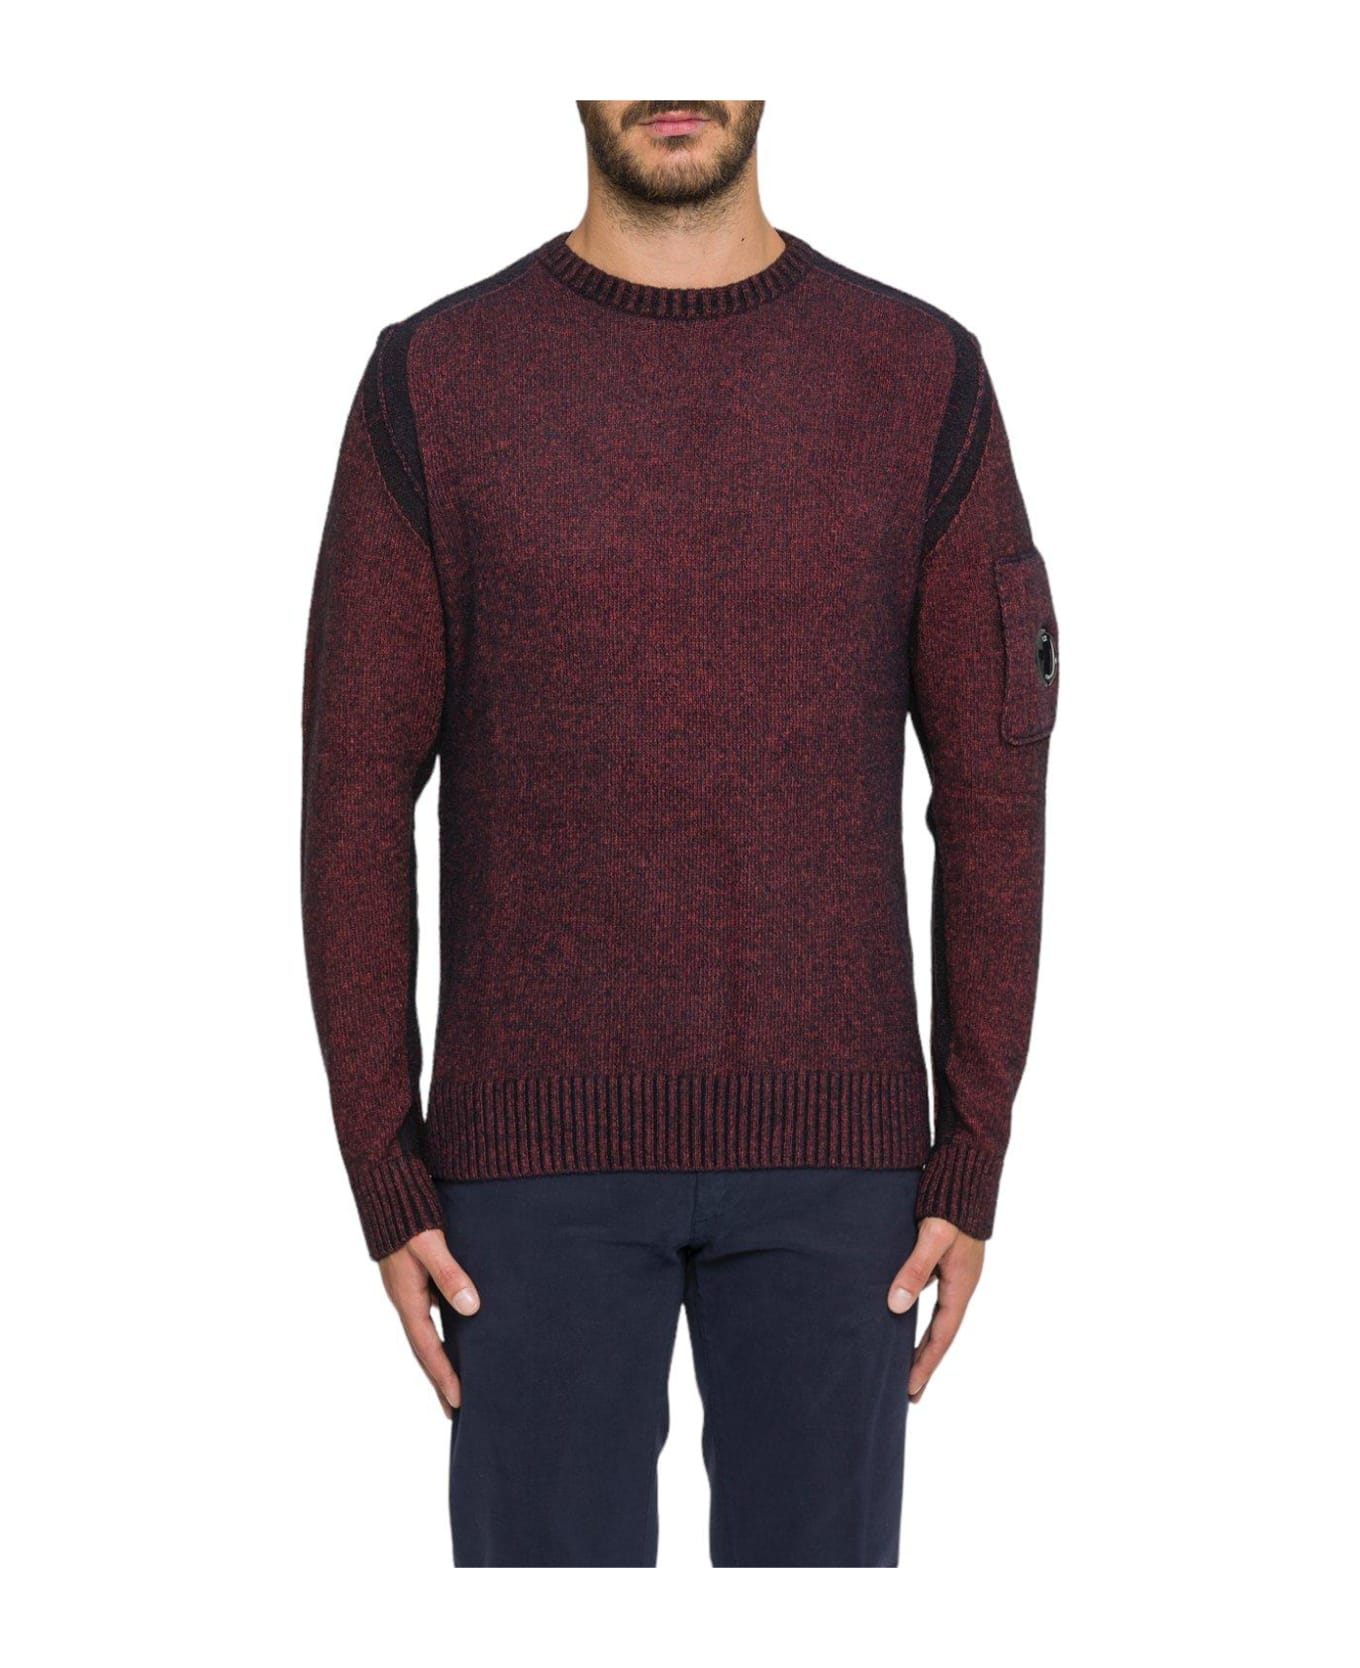 C.P. Company Crewneck Sleeved Sweater - BRICK